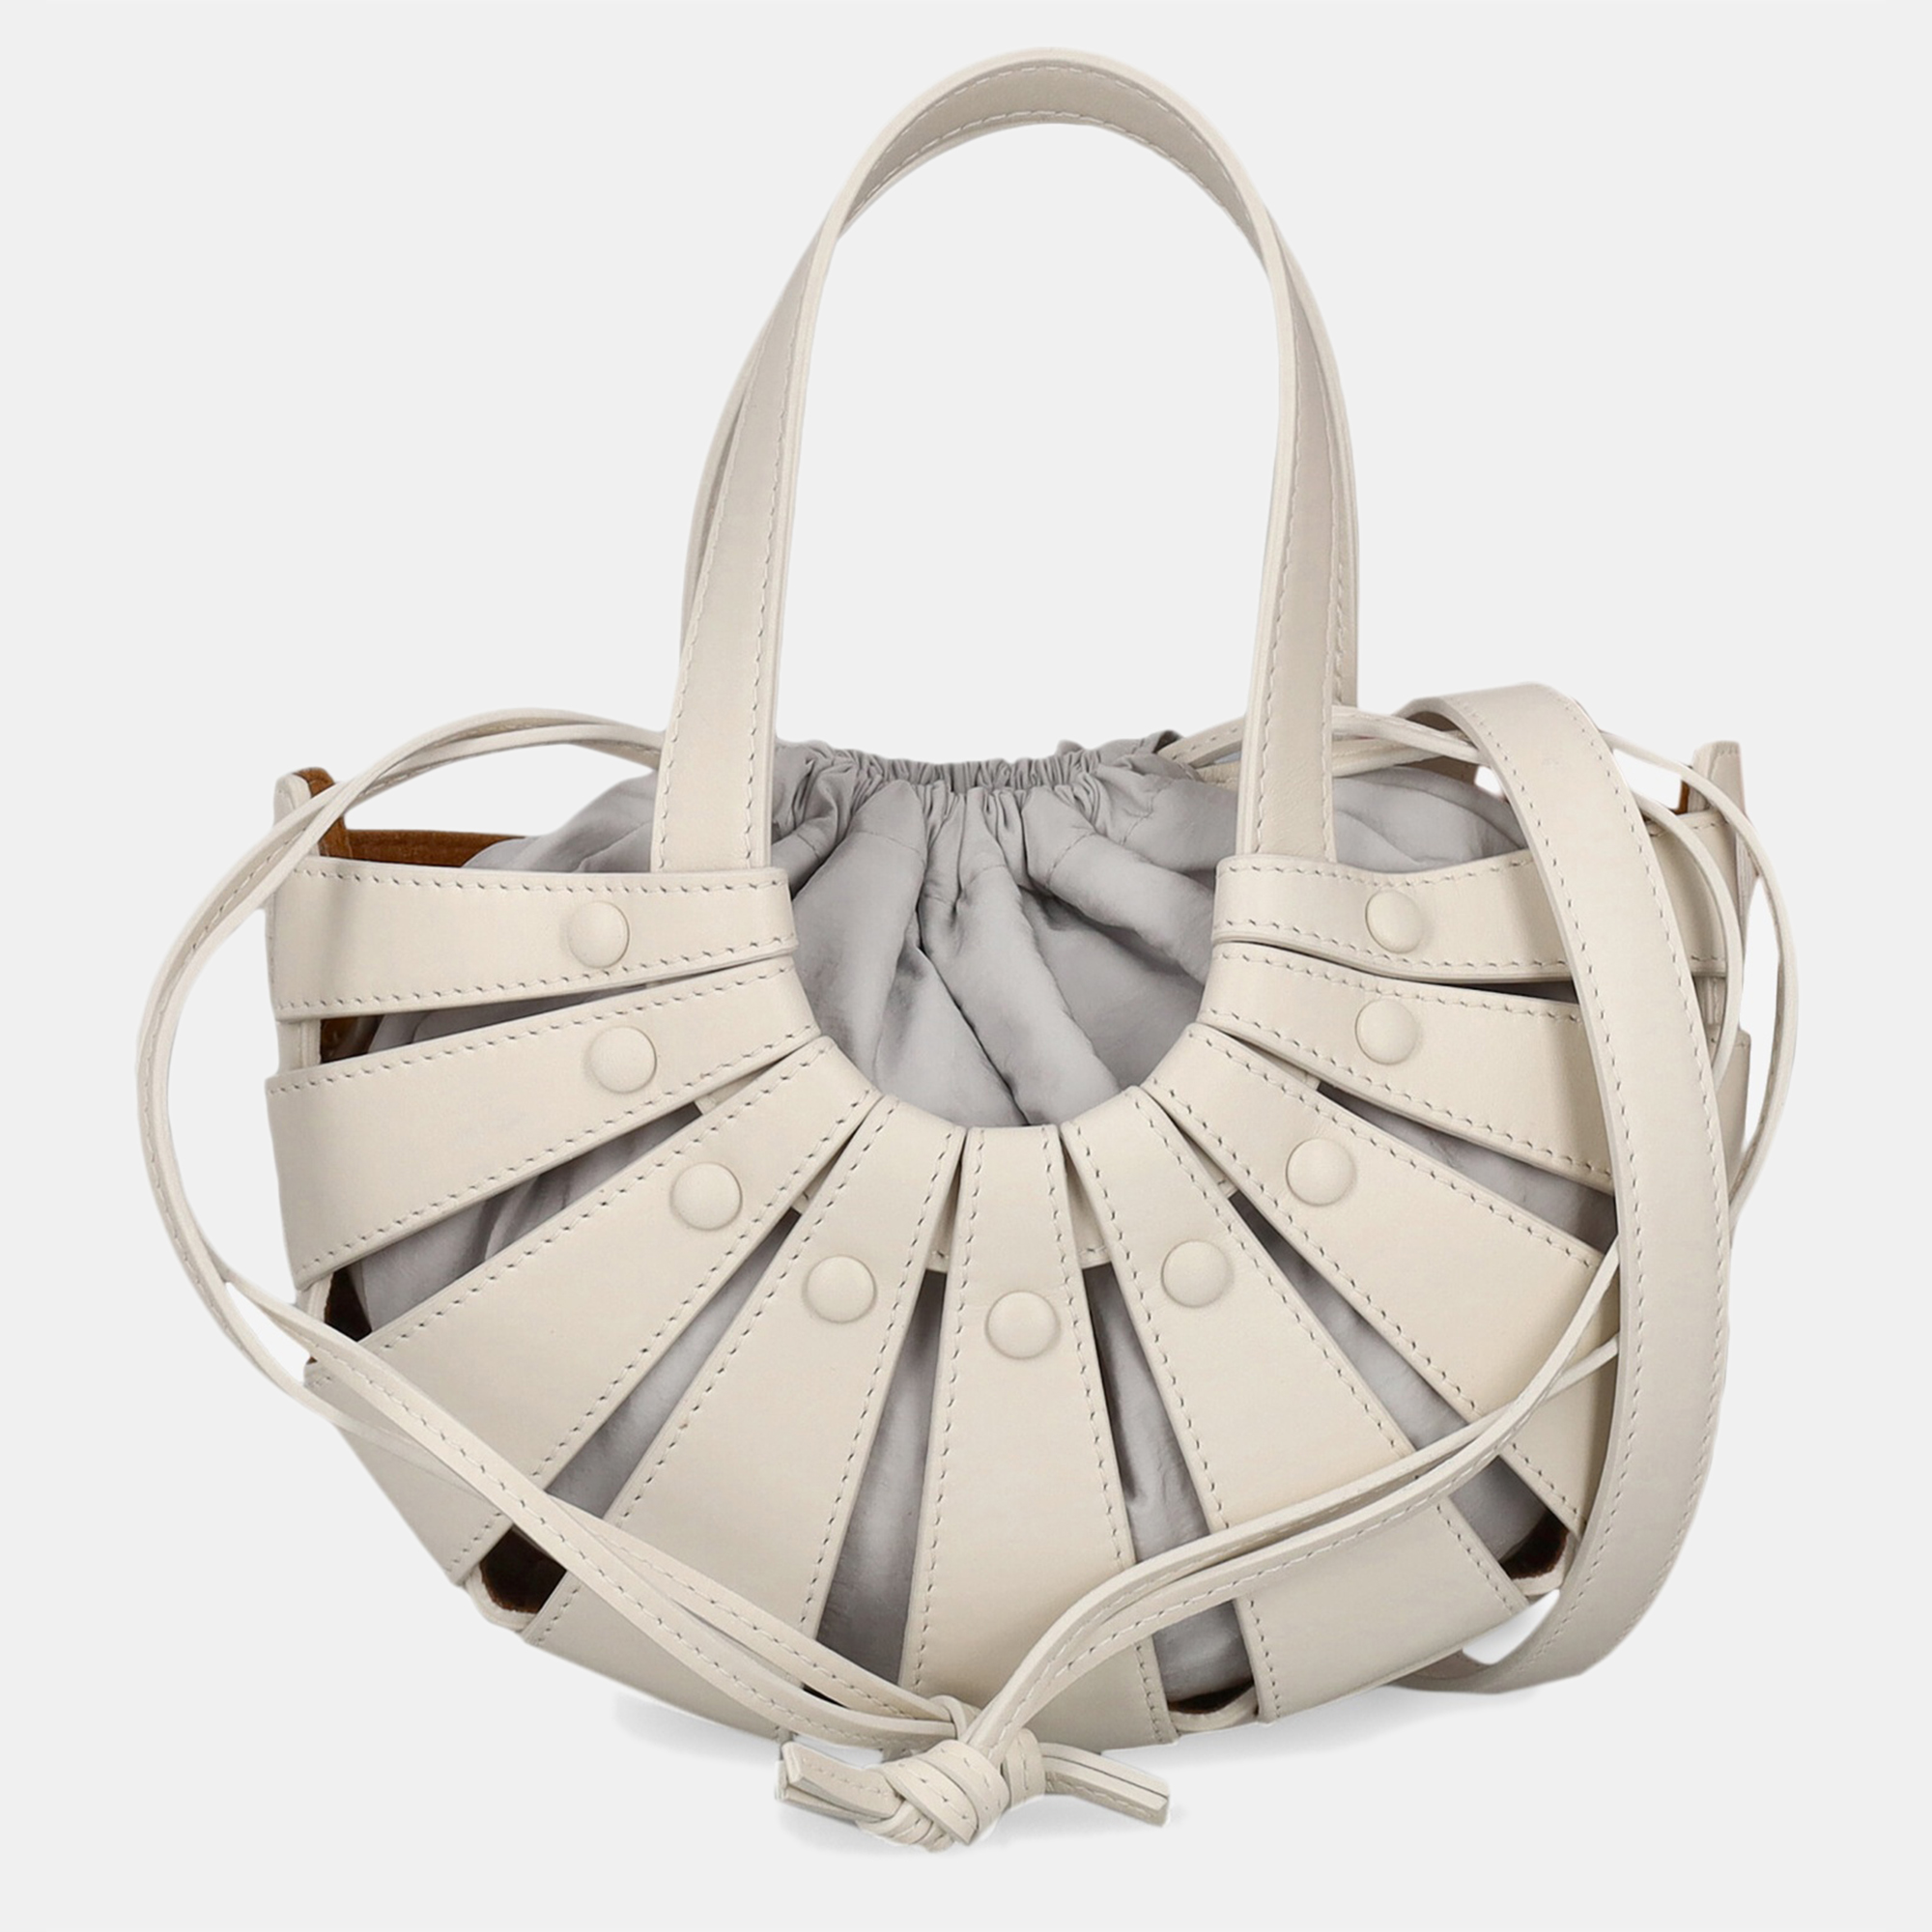 Bottega Veneta  Women's Leather Cross Body Bag - White - One Size